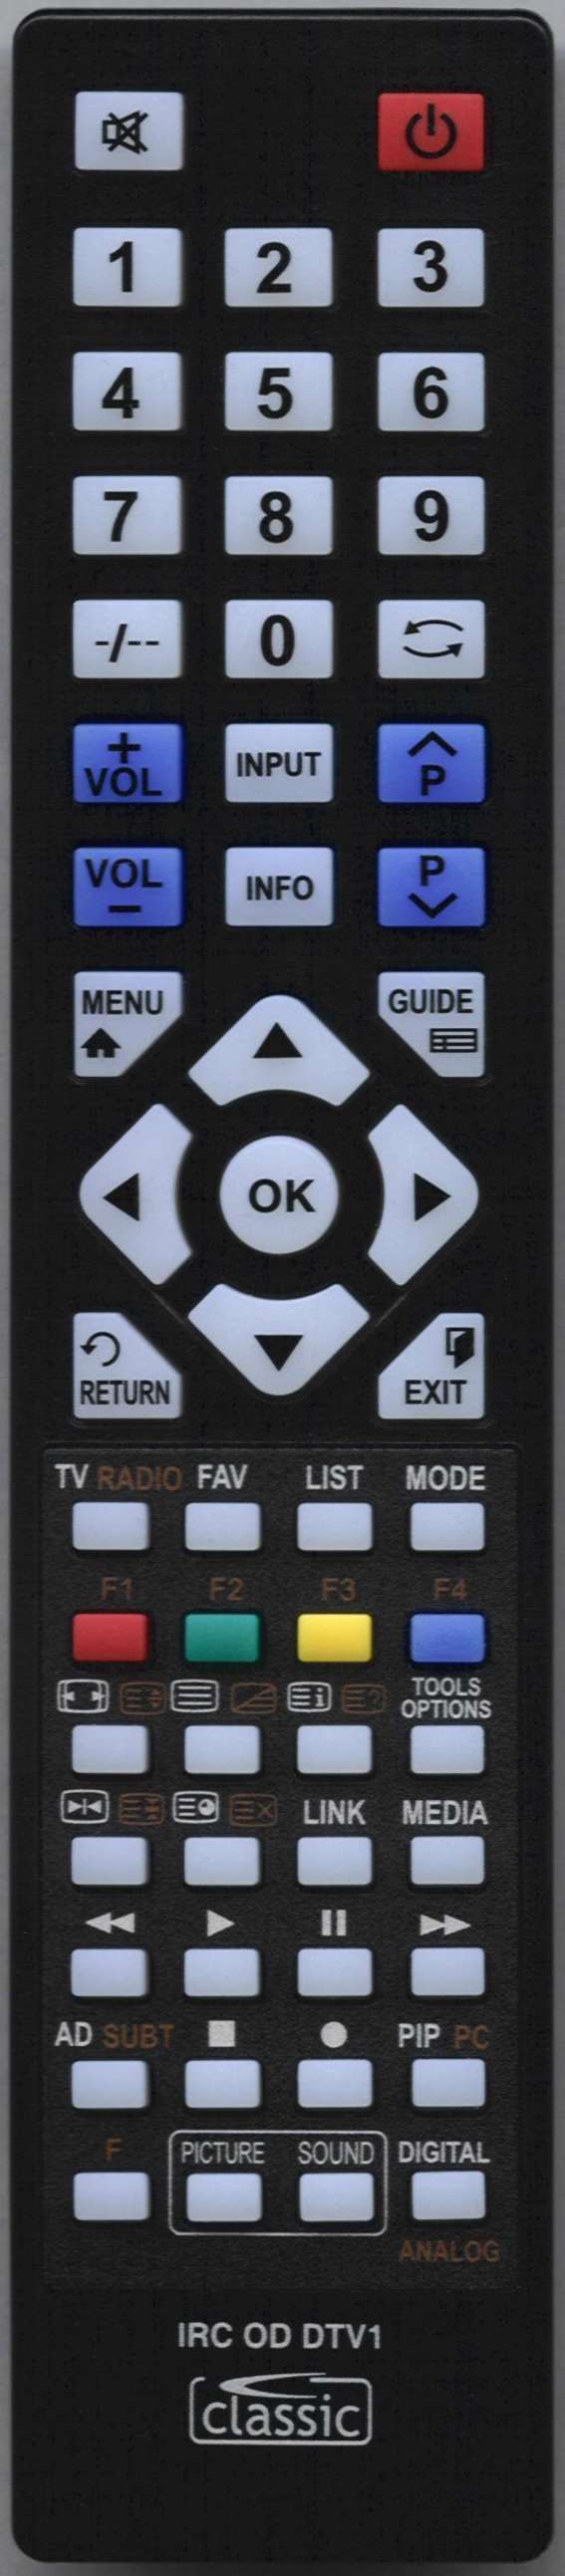 PANASONIC TX49DSW504 Remote Control Alternative